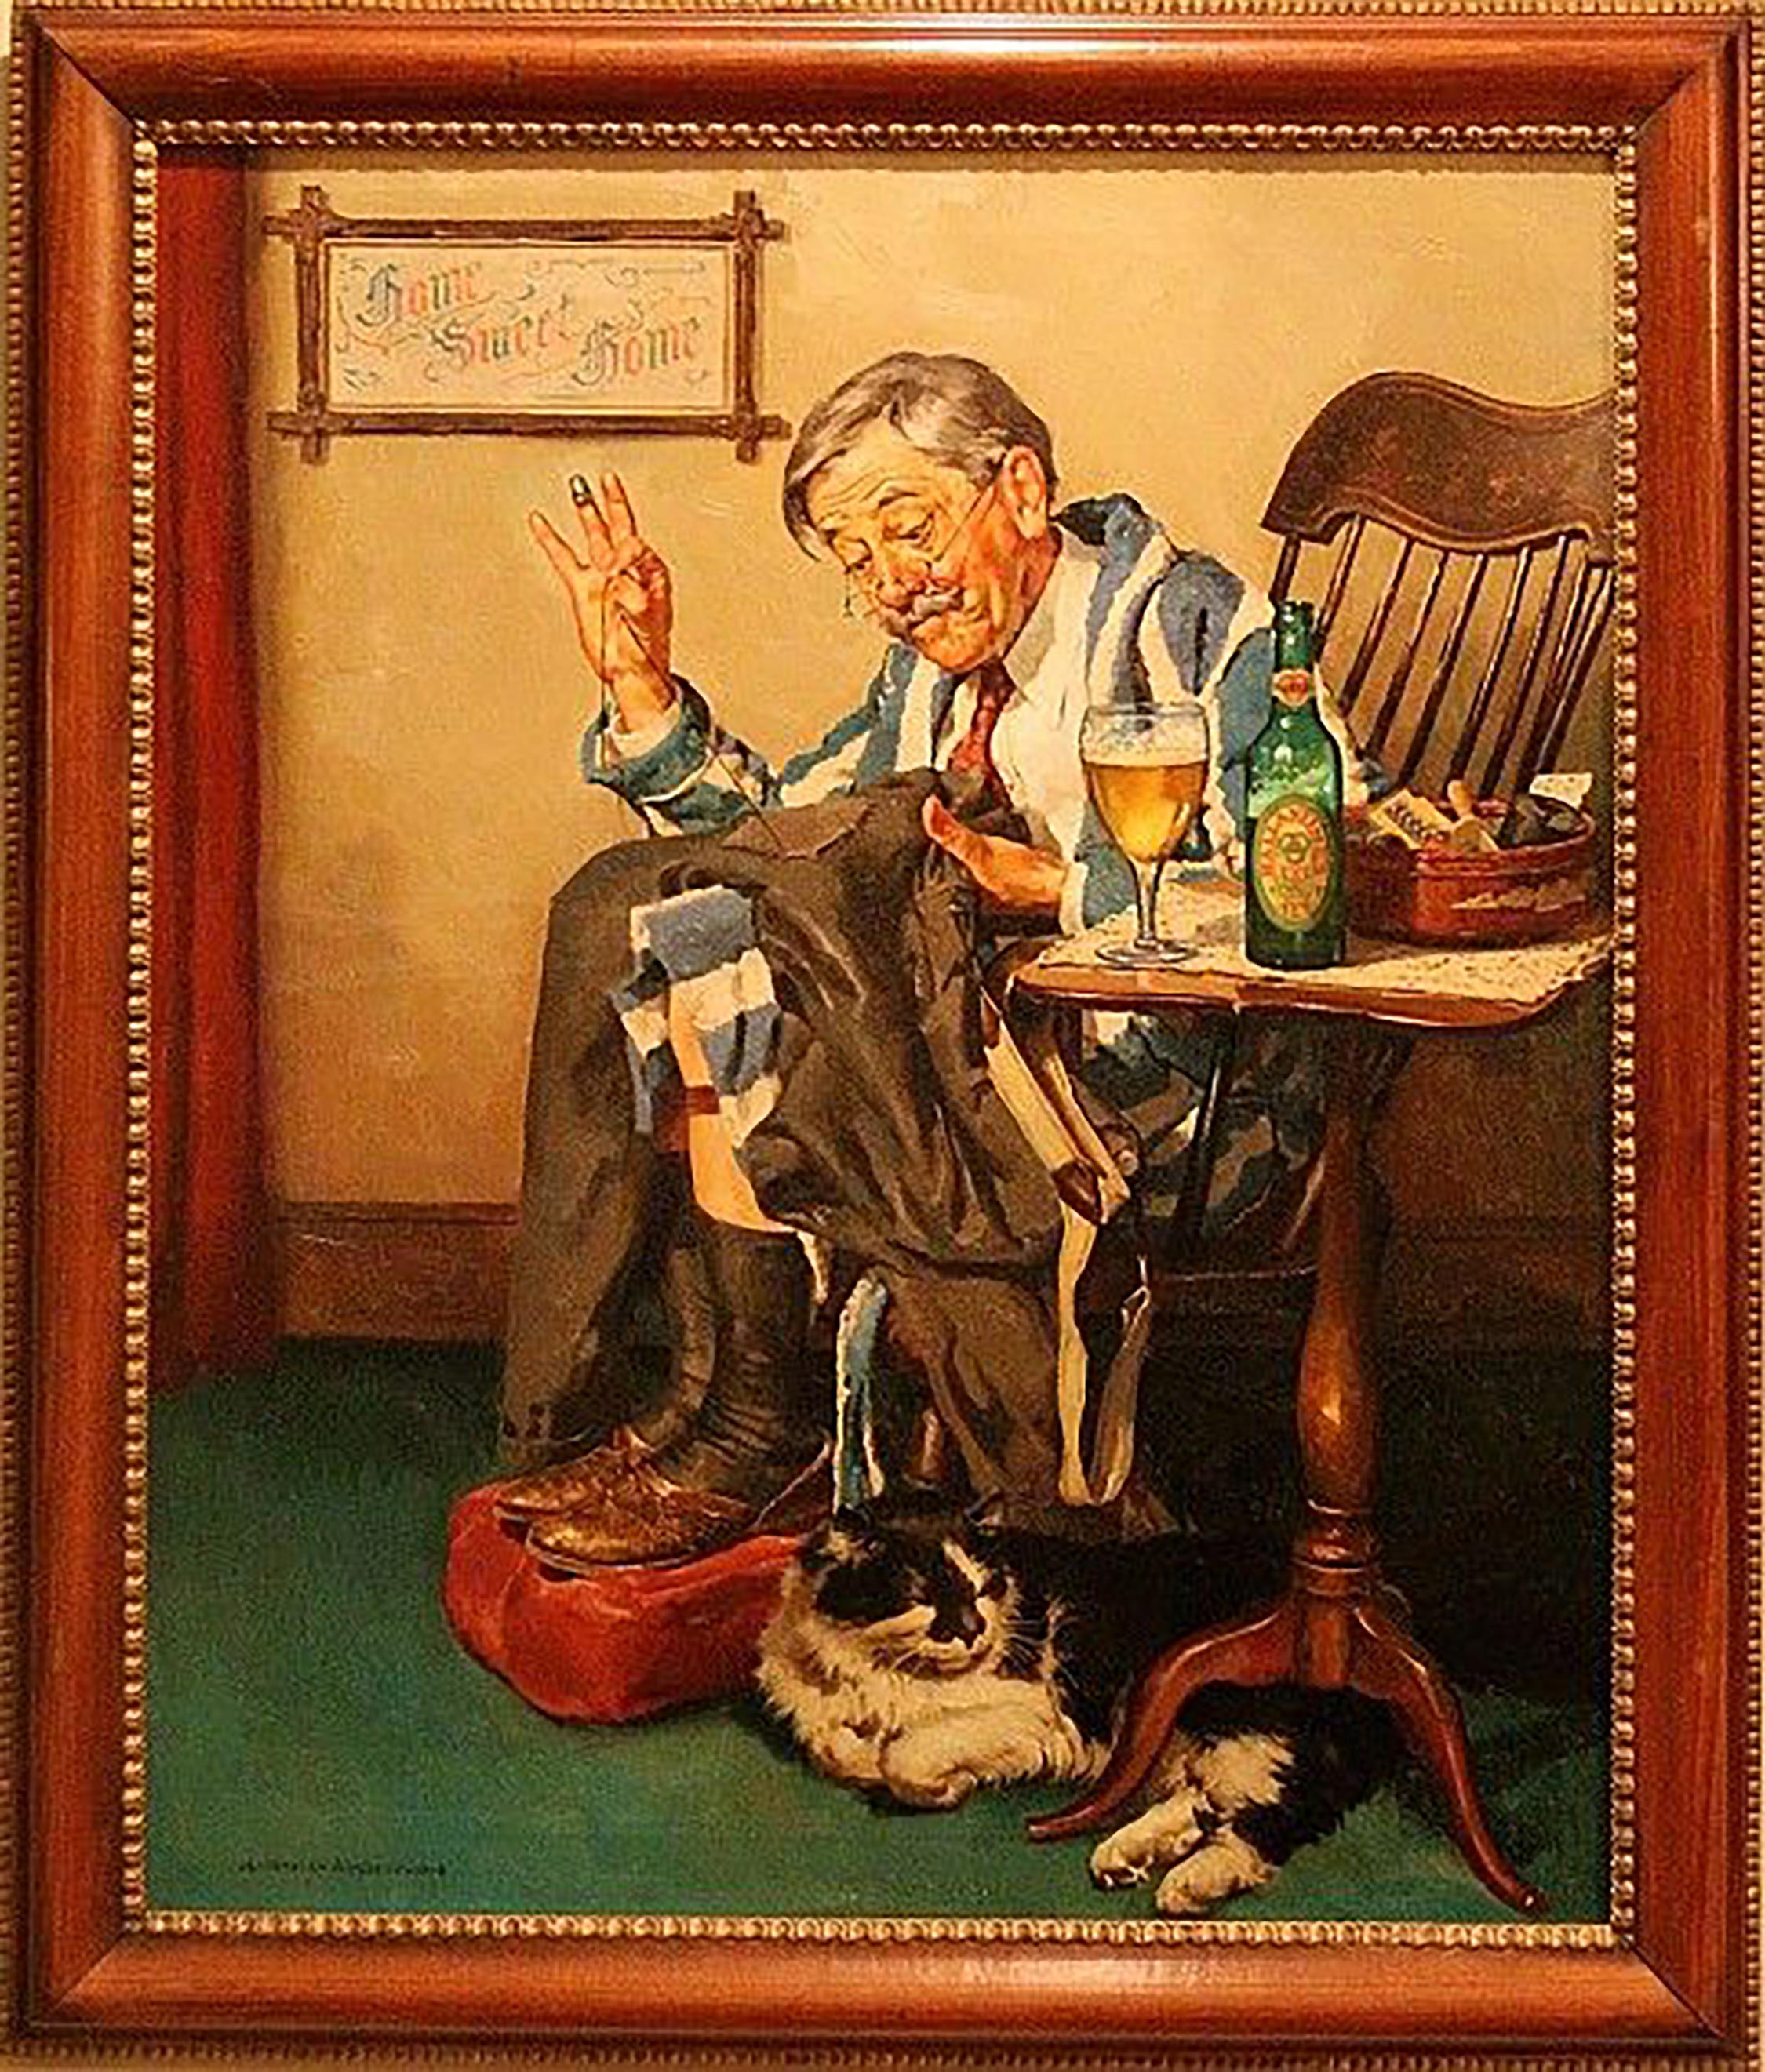 Ballentine Beer Advertisement - Painting by Harold Anderson